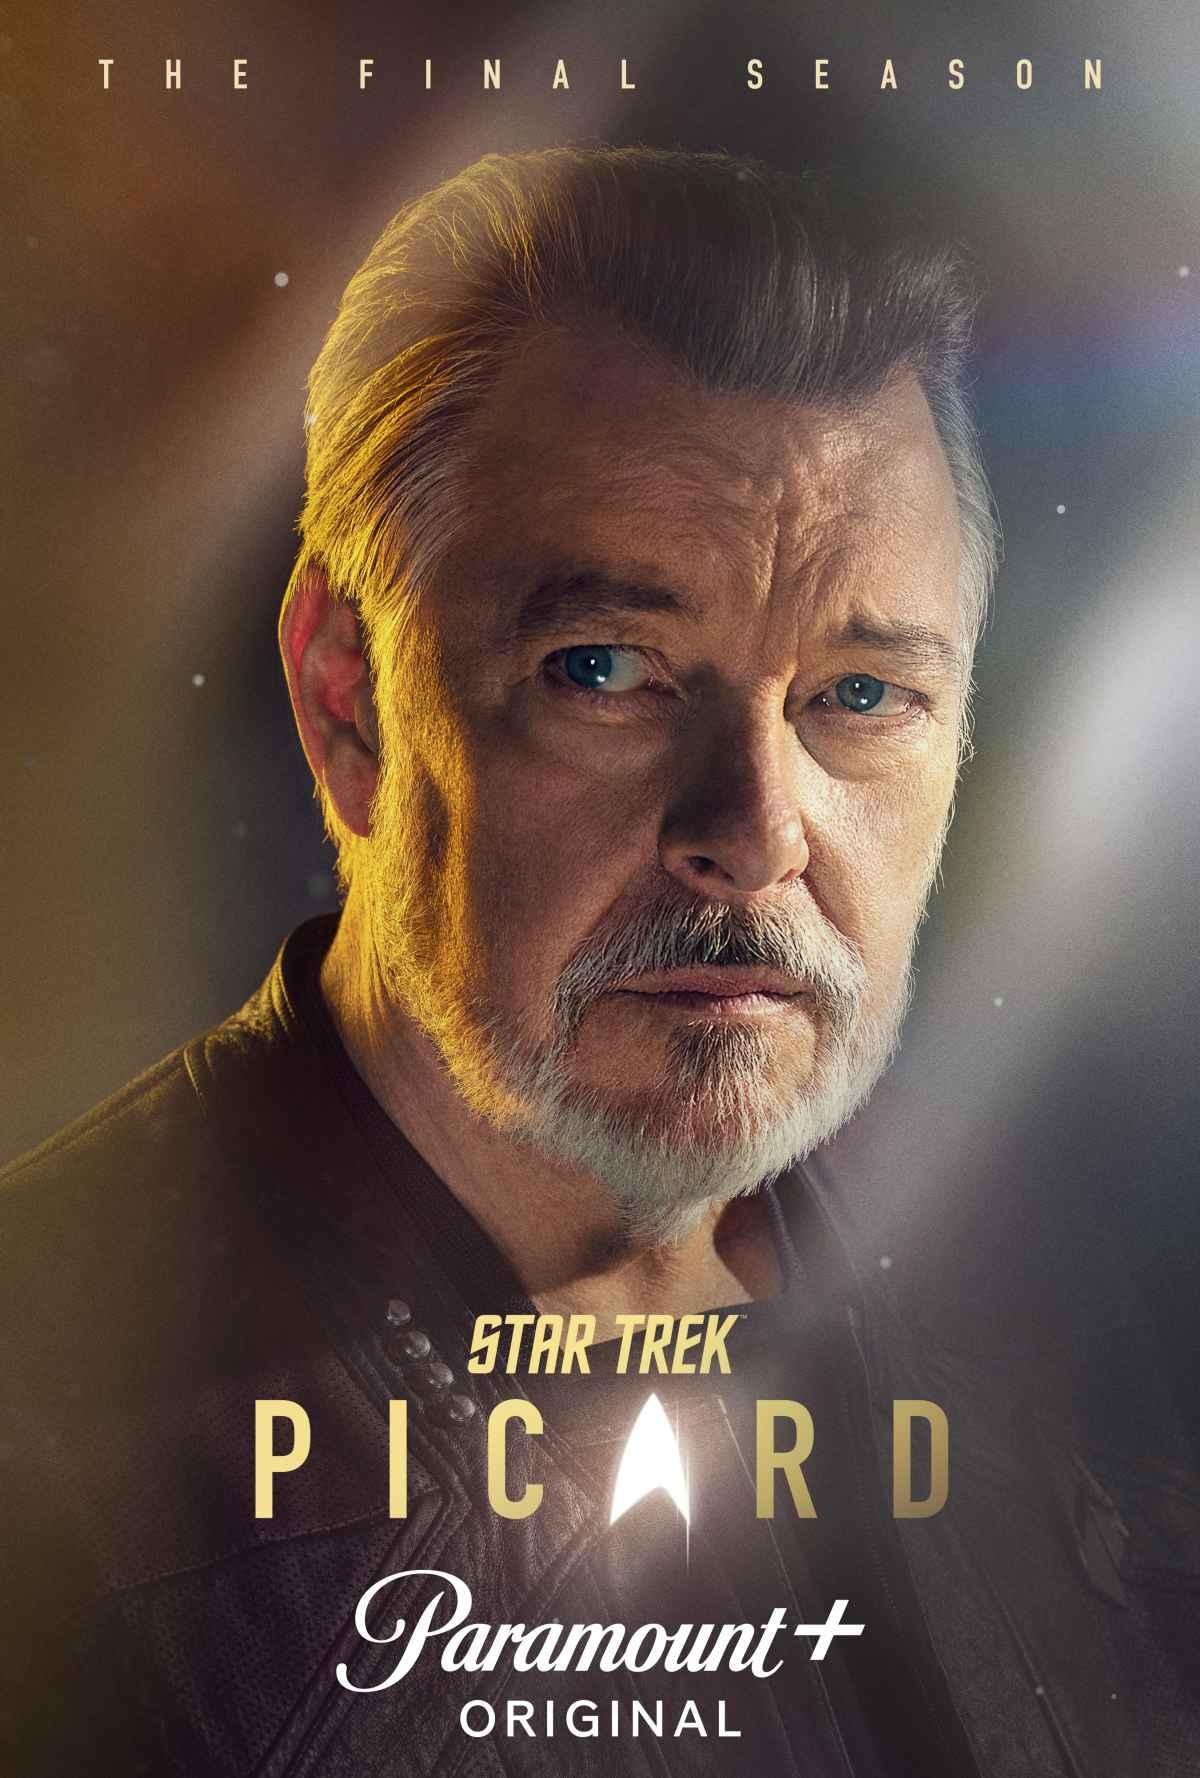 Star Trek: Picard Season 3 Teaser Reveals First Look at Returning Next ...